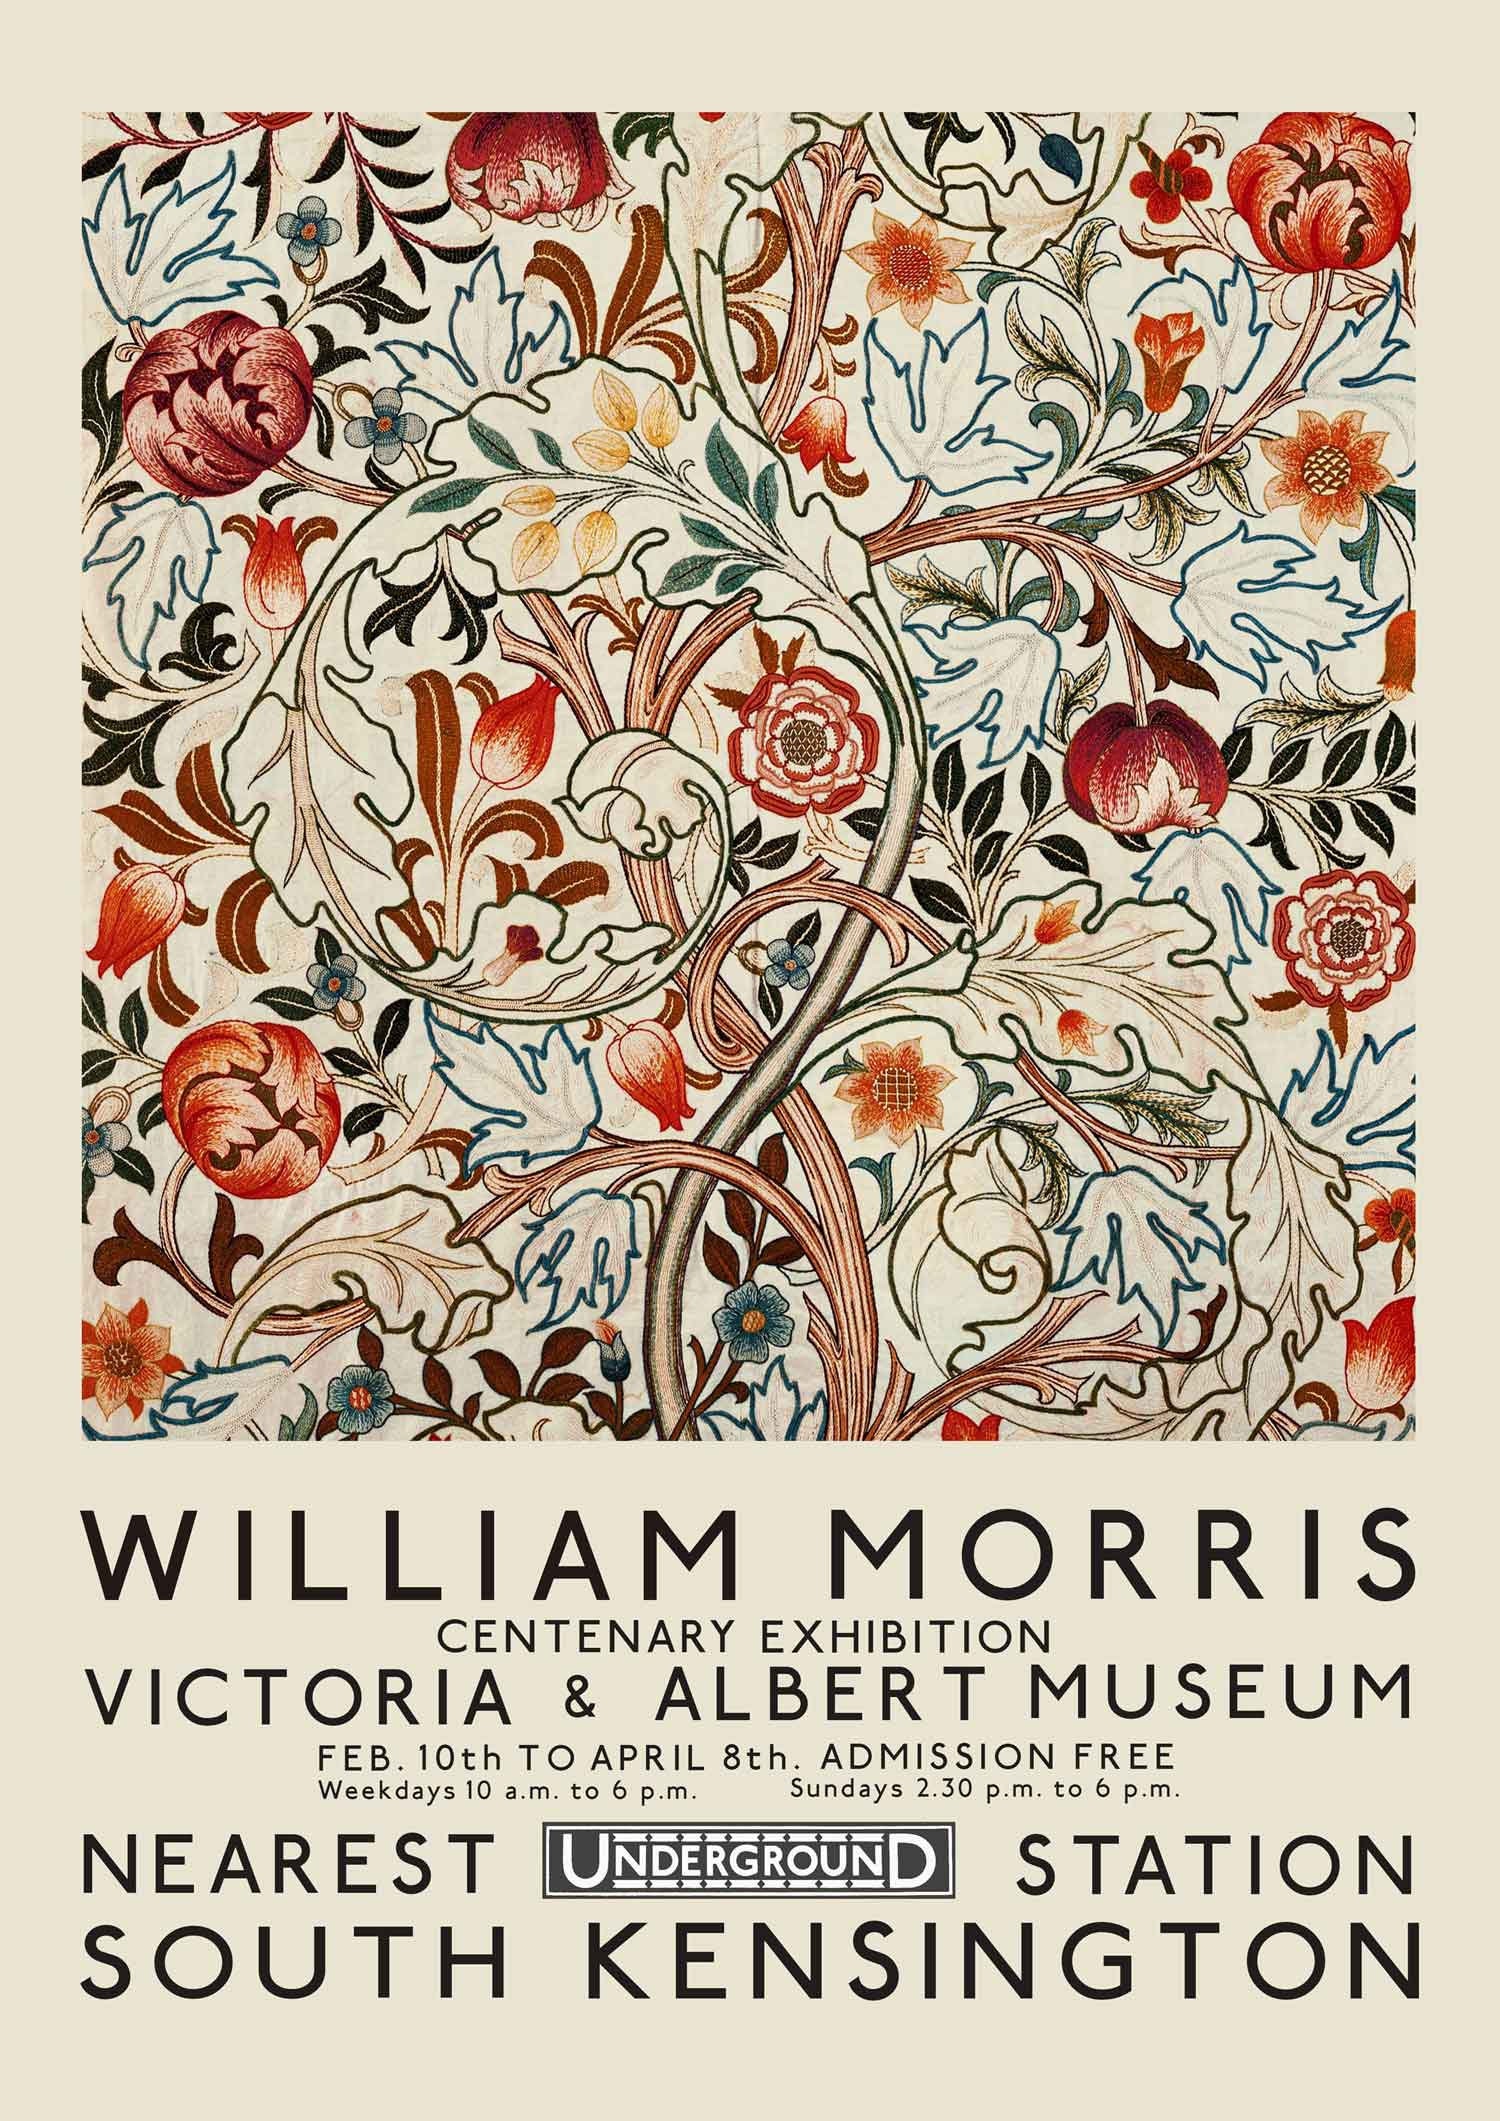 William Morris V&A Museum Exhibition Poster - Acanthus